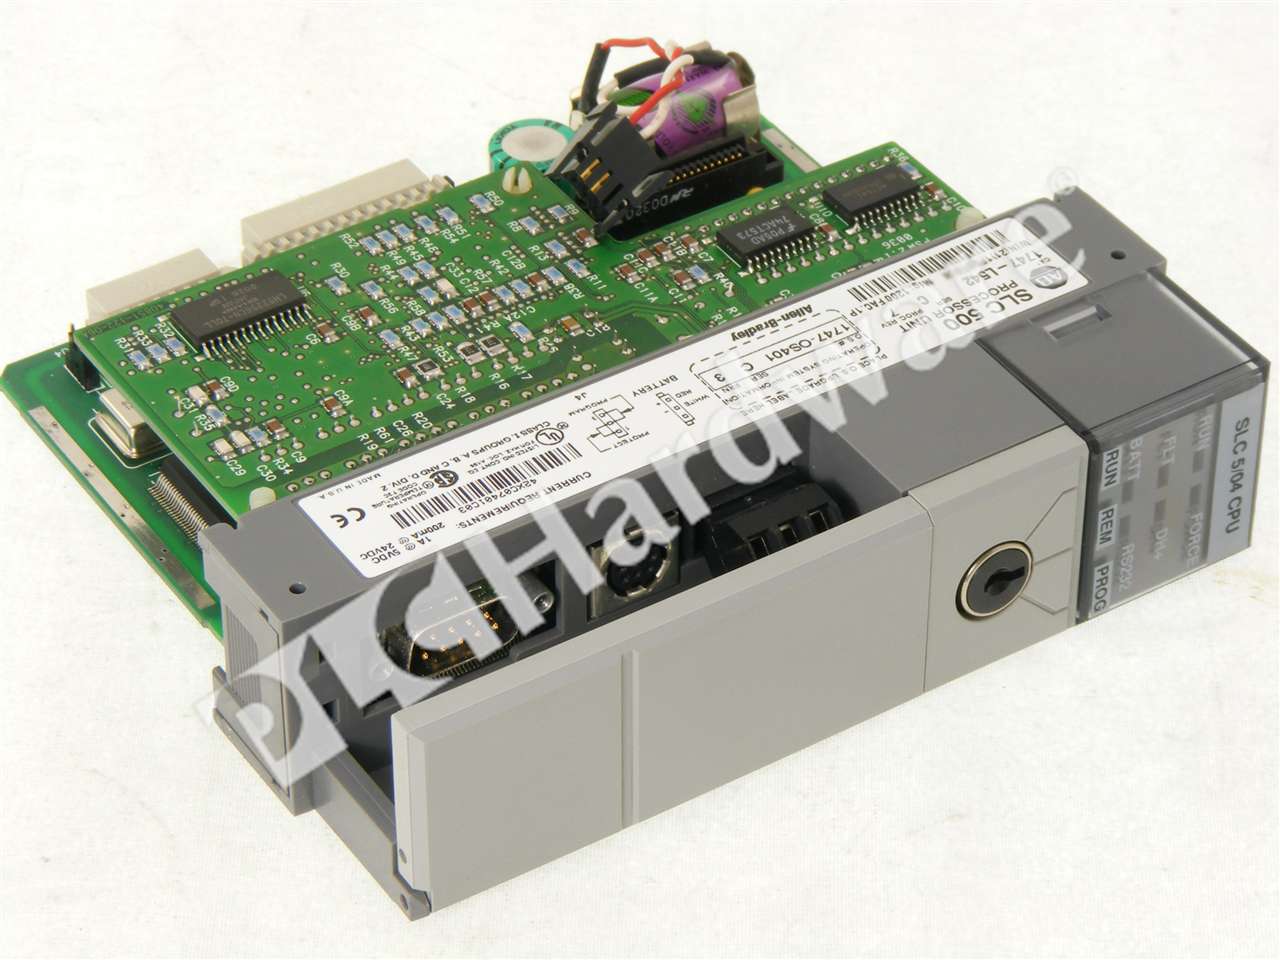 PLC Hardware - Allen Bradley 1747-L542 Series C, Used in a PLCH Packaging